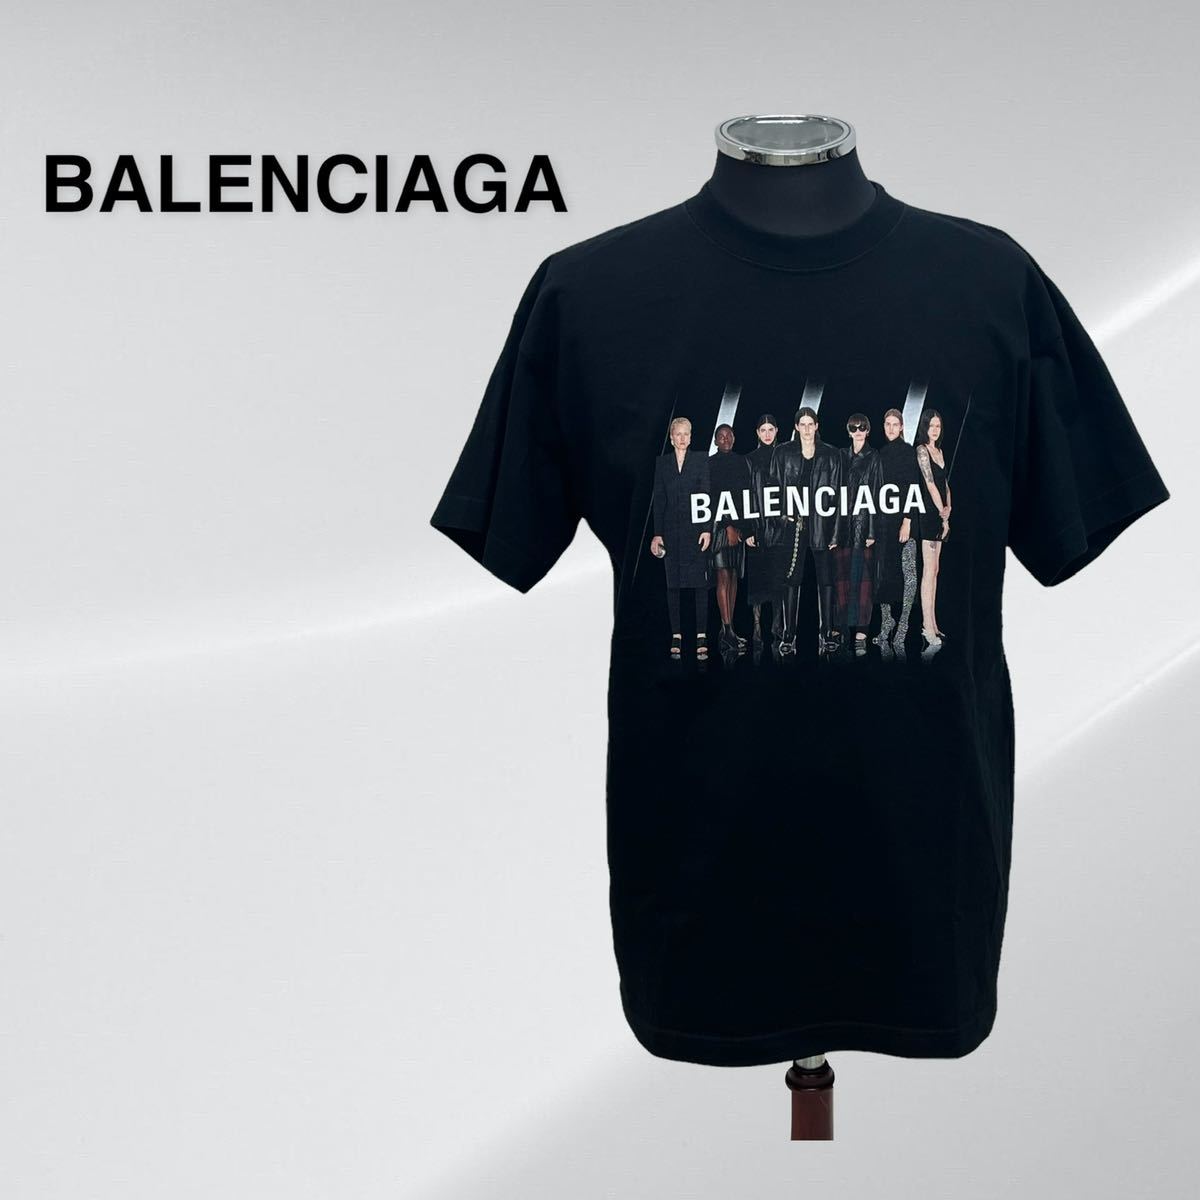 BALENCIAGA バレンシアガ REAL BALENCIAGA リアルバレンシアガ プリント クルーネック 半袖 Tシャツ メンズ 612965 TIVA1